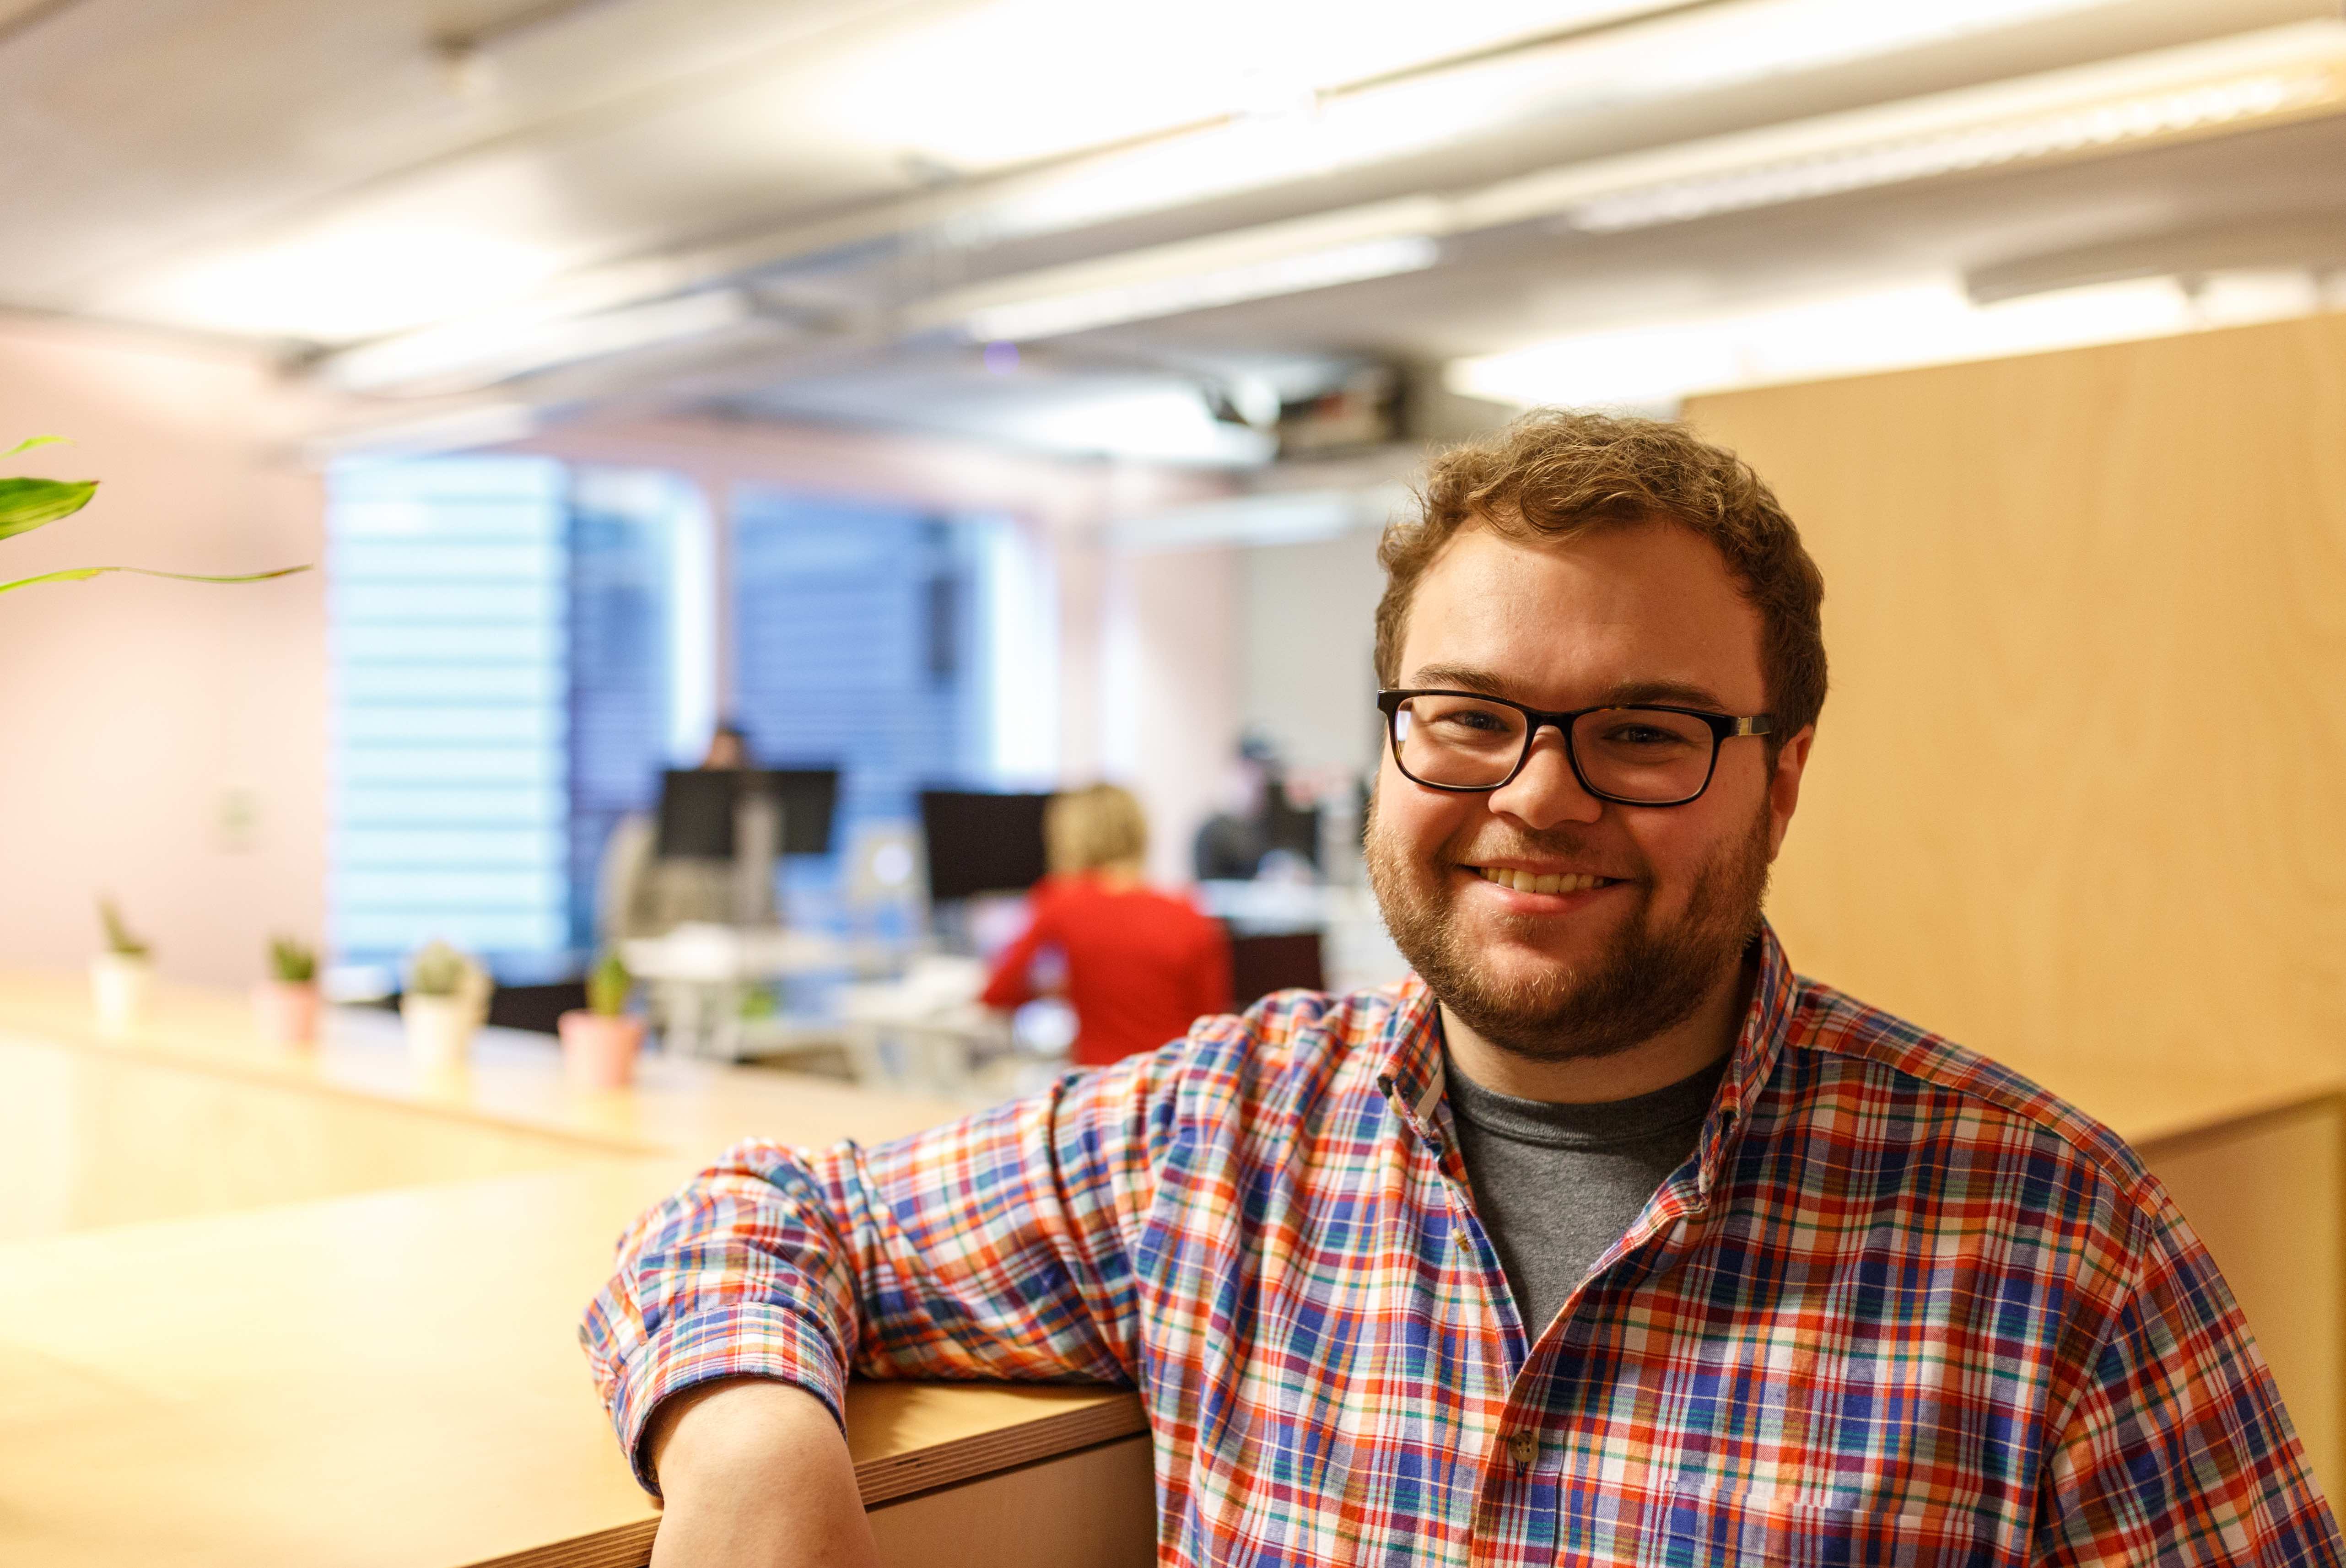 Paddle, the software sales platform founded by a Thiel Fellow, raises $12.5M